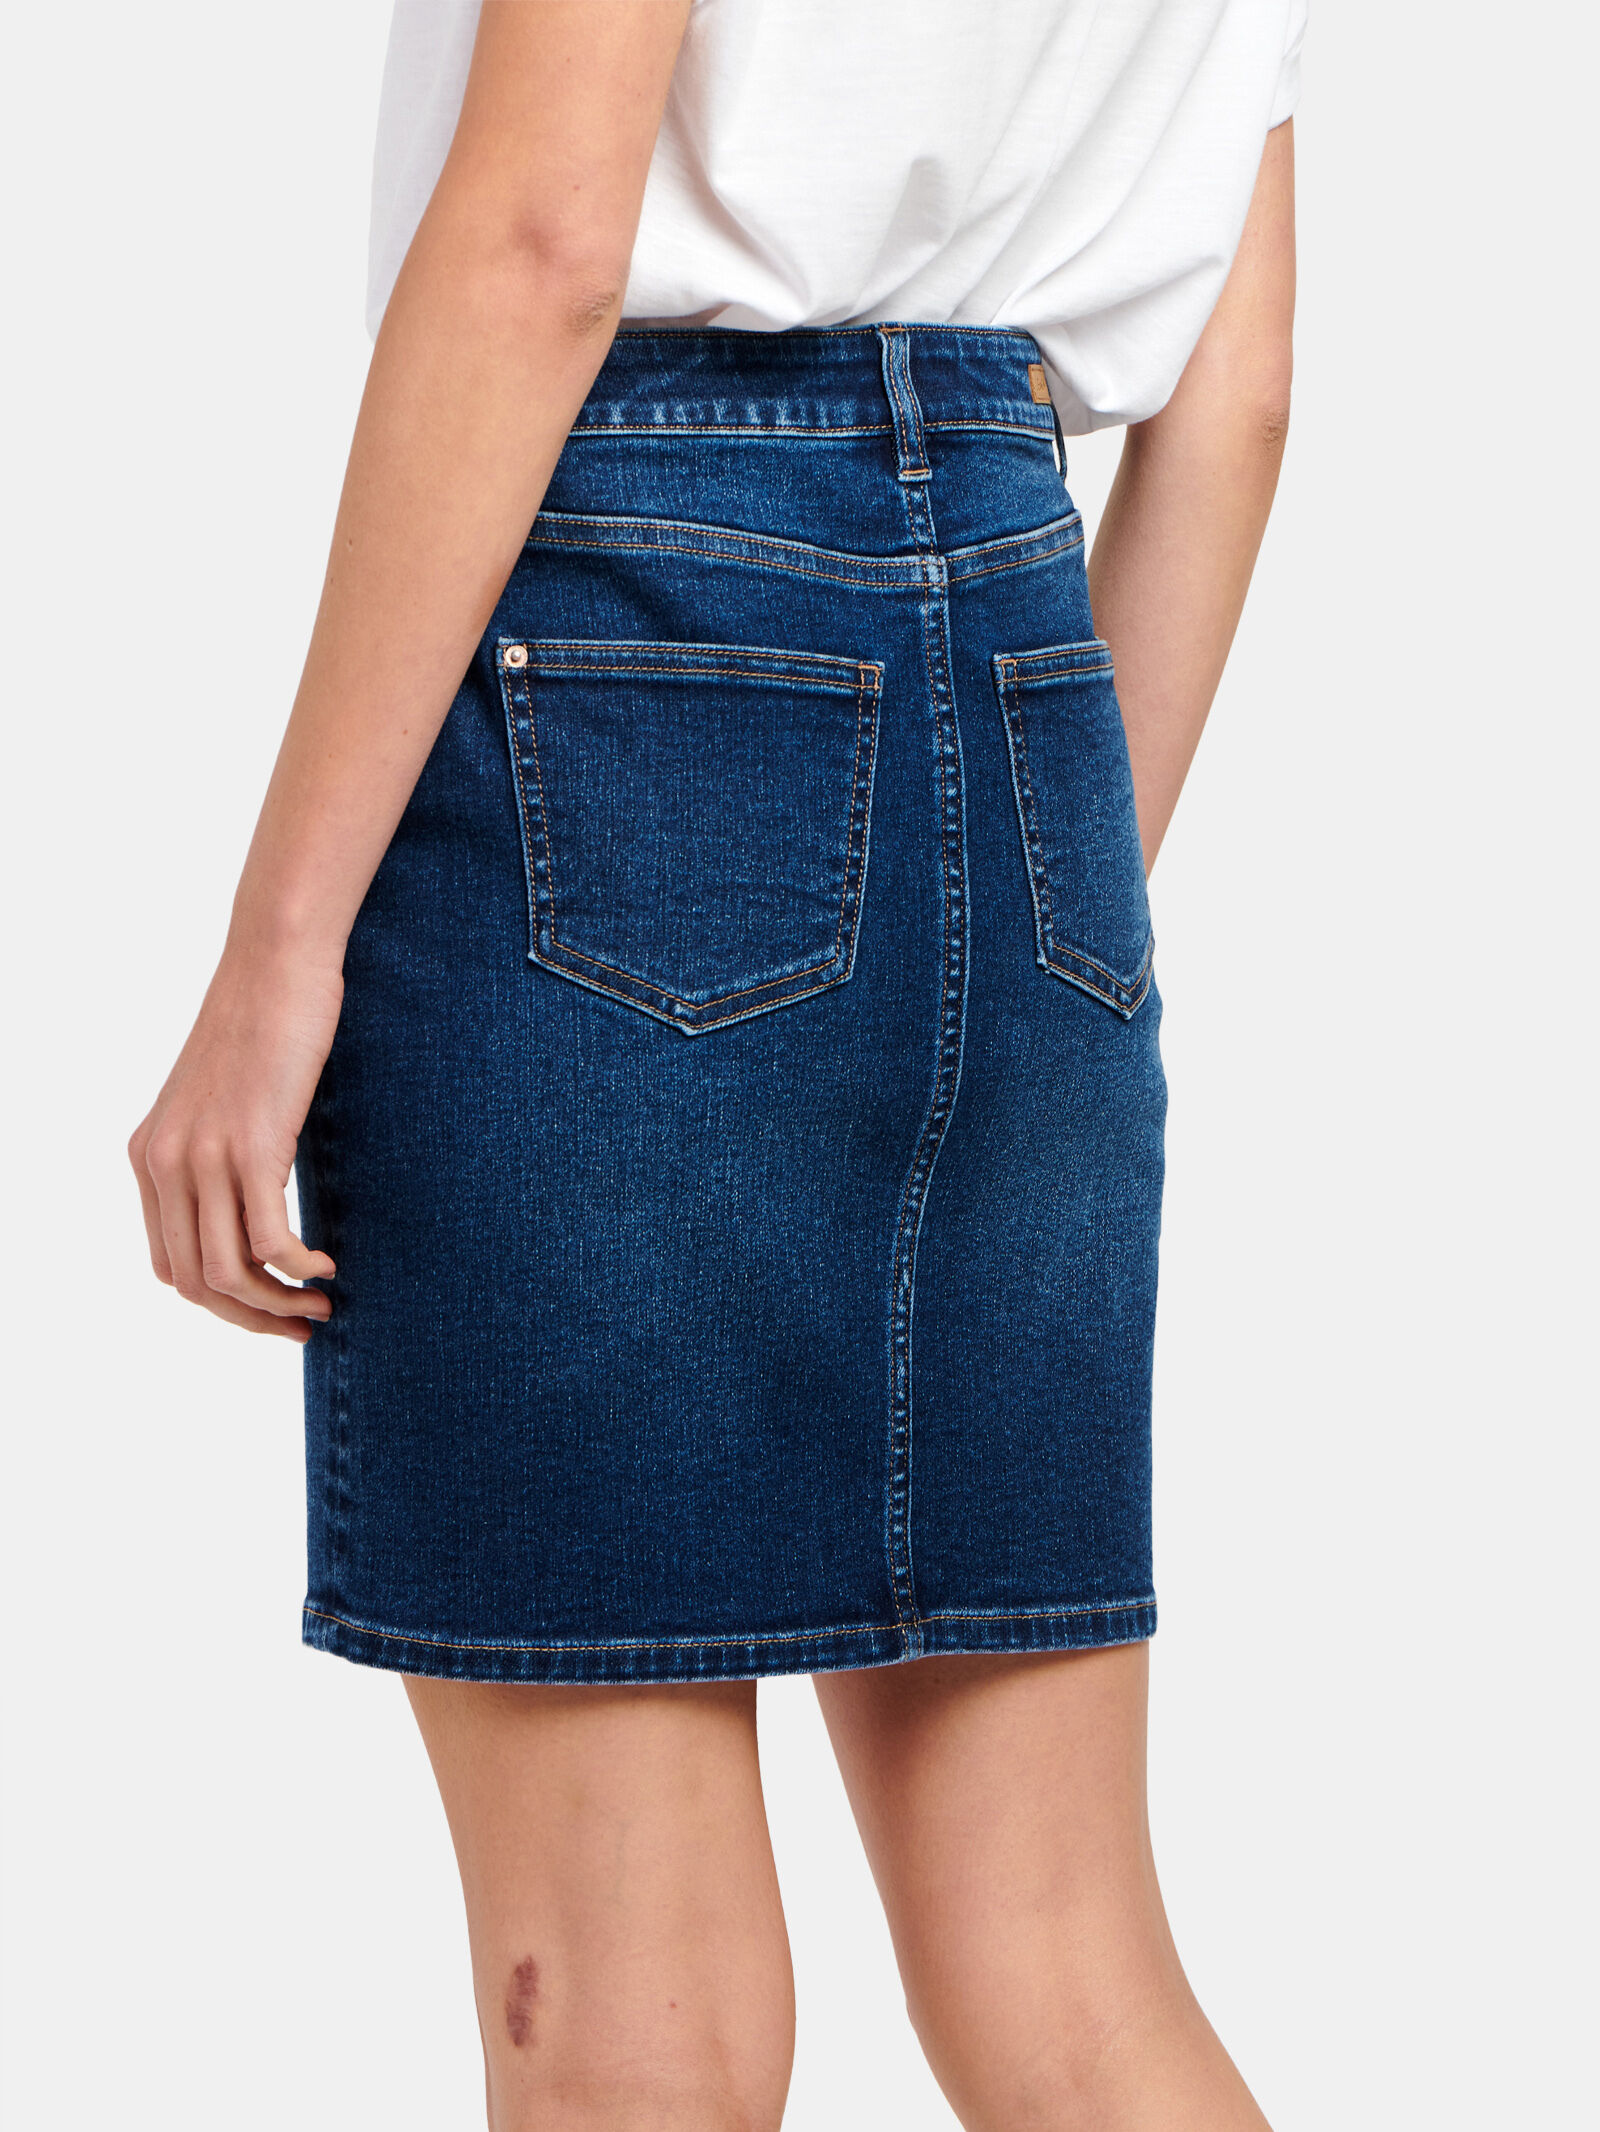 Y2K denim mini skirt from jeans west low rise ... - Depop